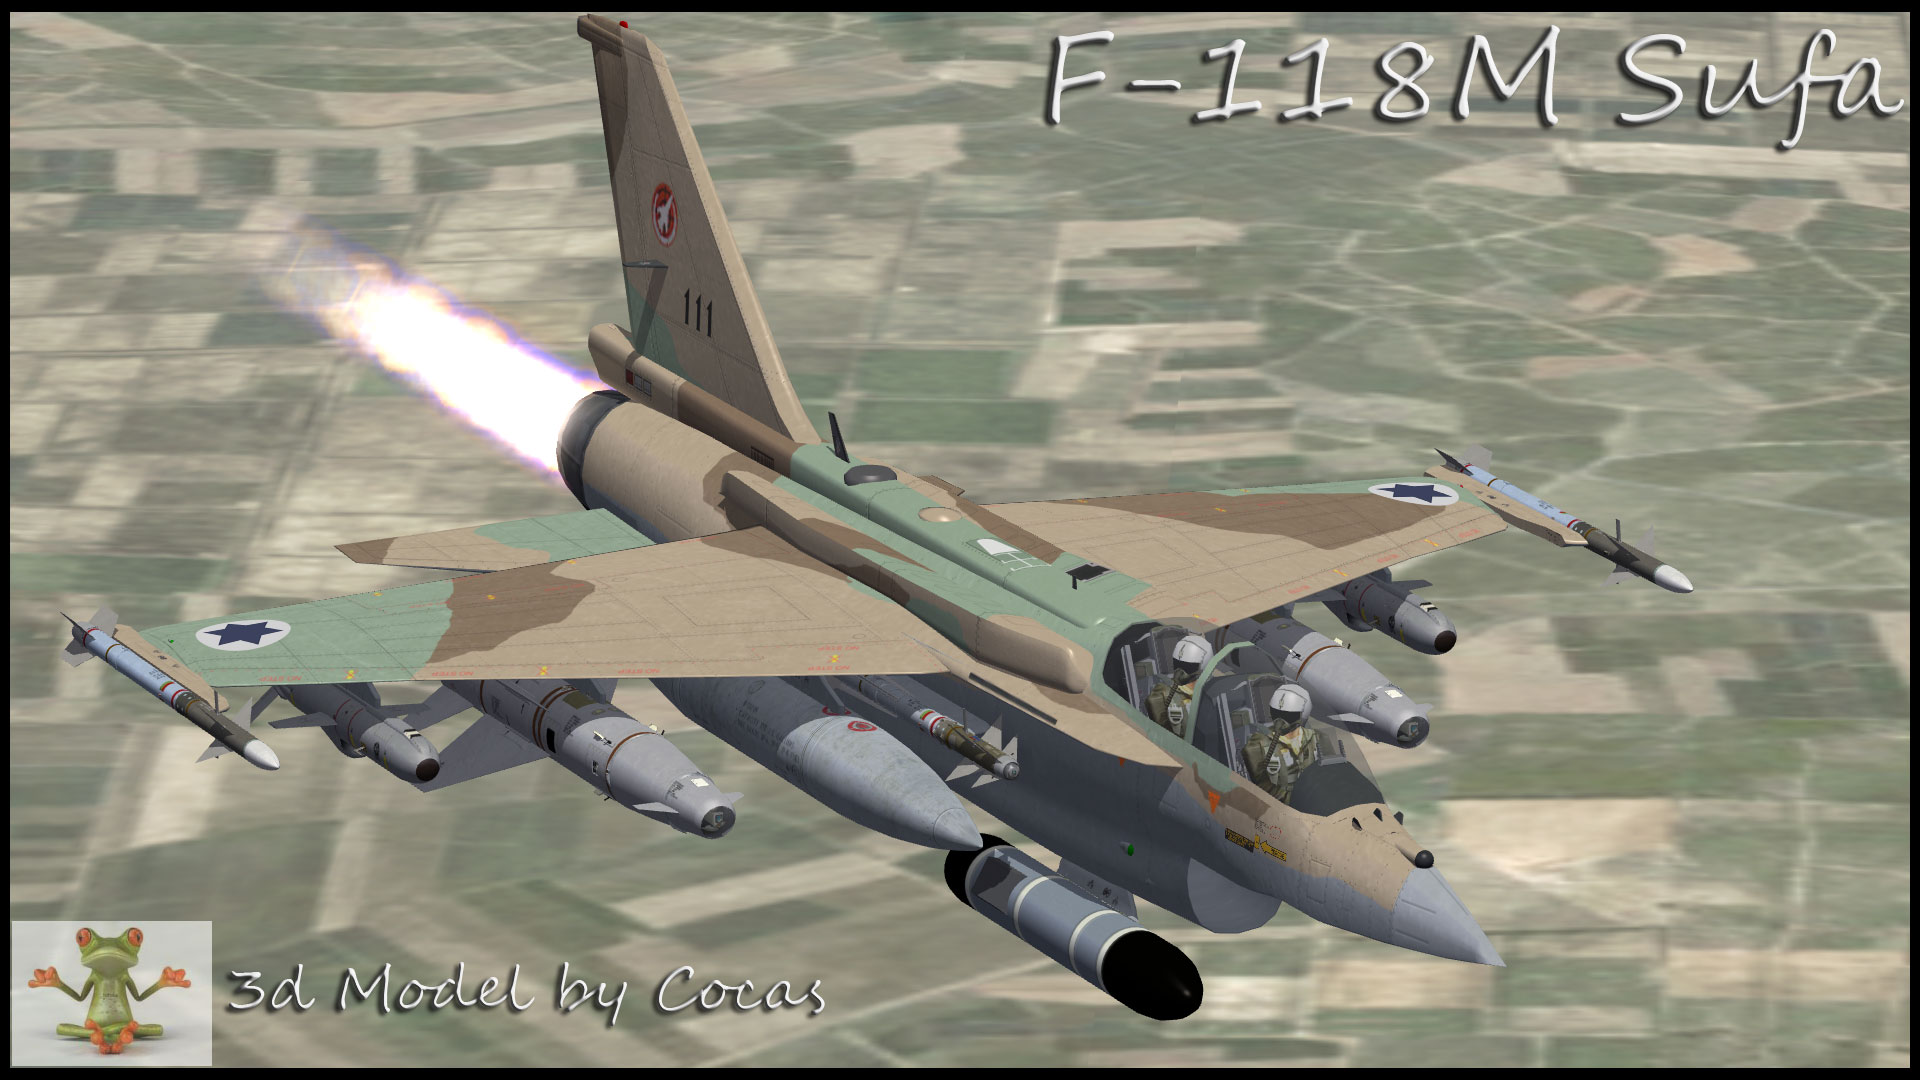 Vought F-118 Raider - Israeli Air Force Pack